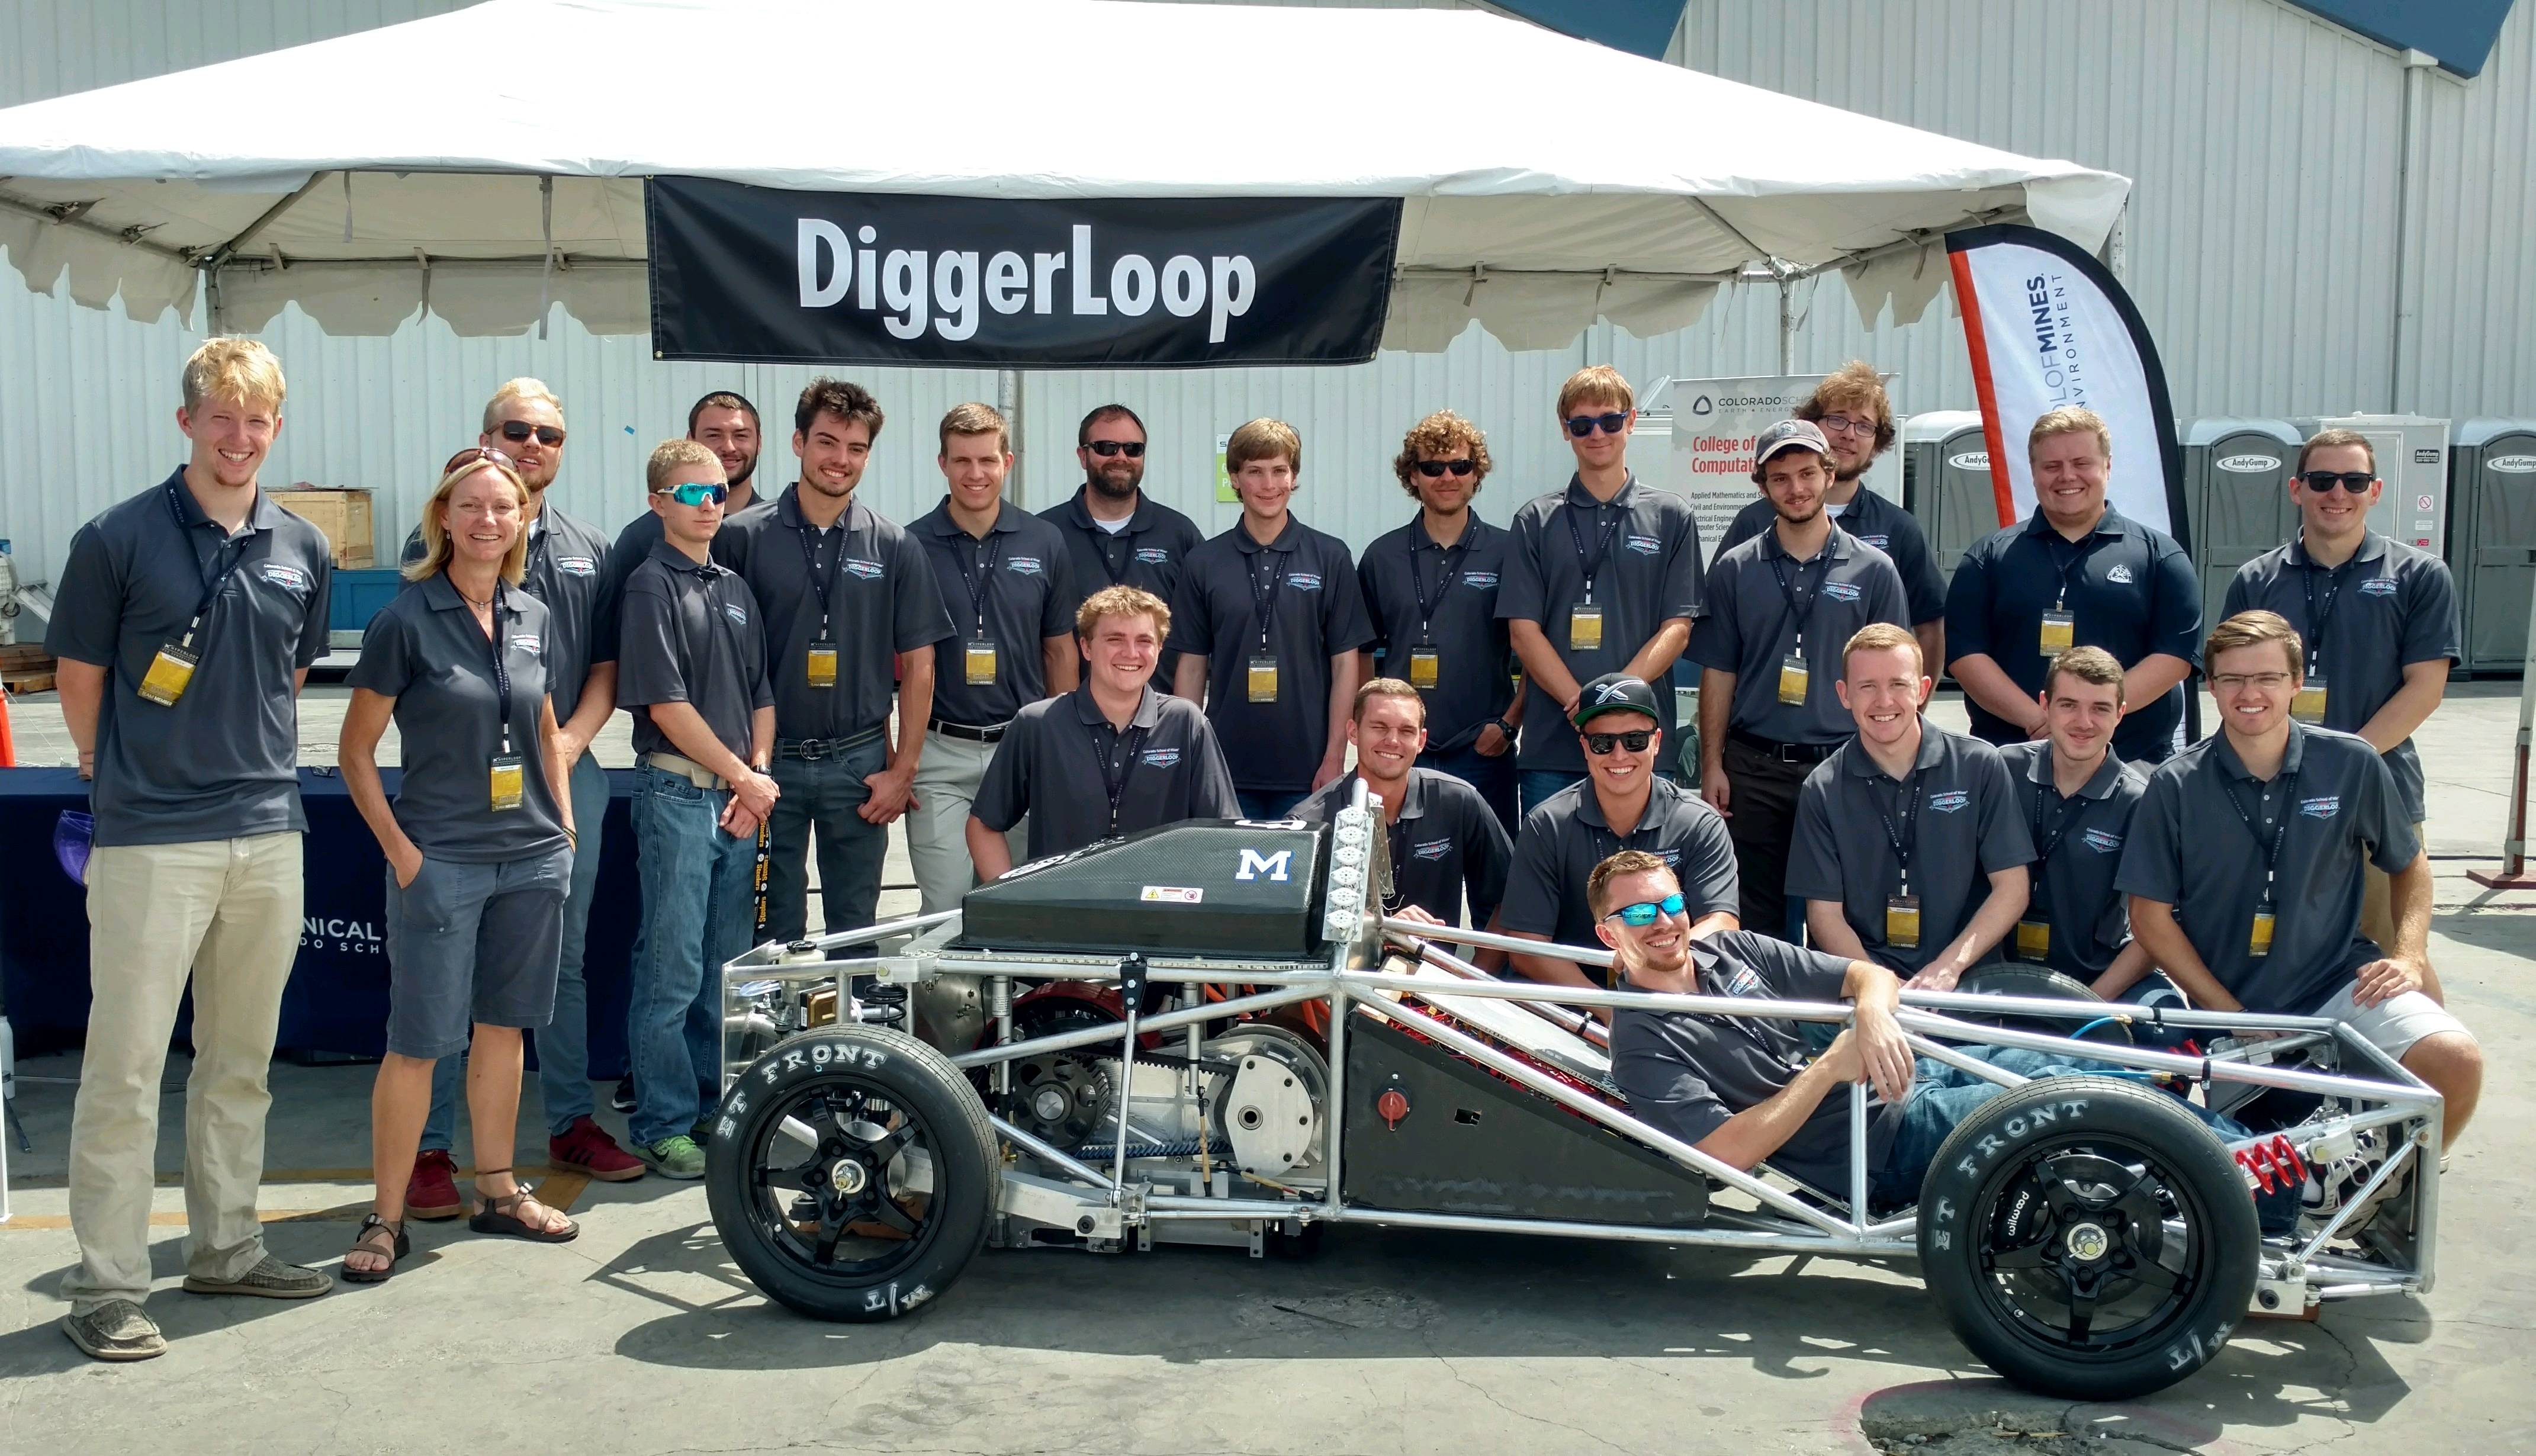 Team DiggerLoop at the SpaceX Hyperloop competition in California